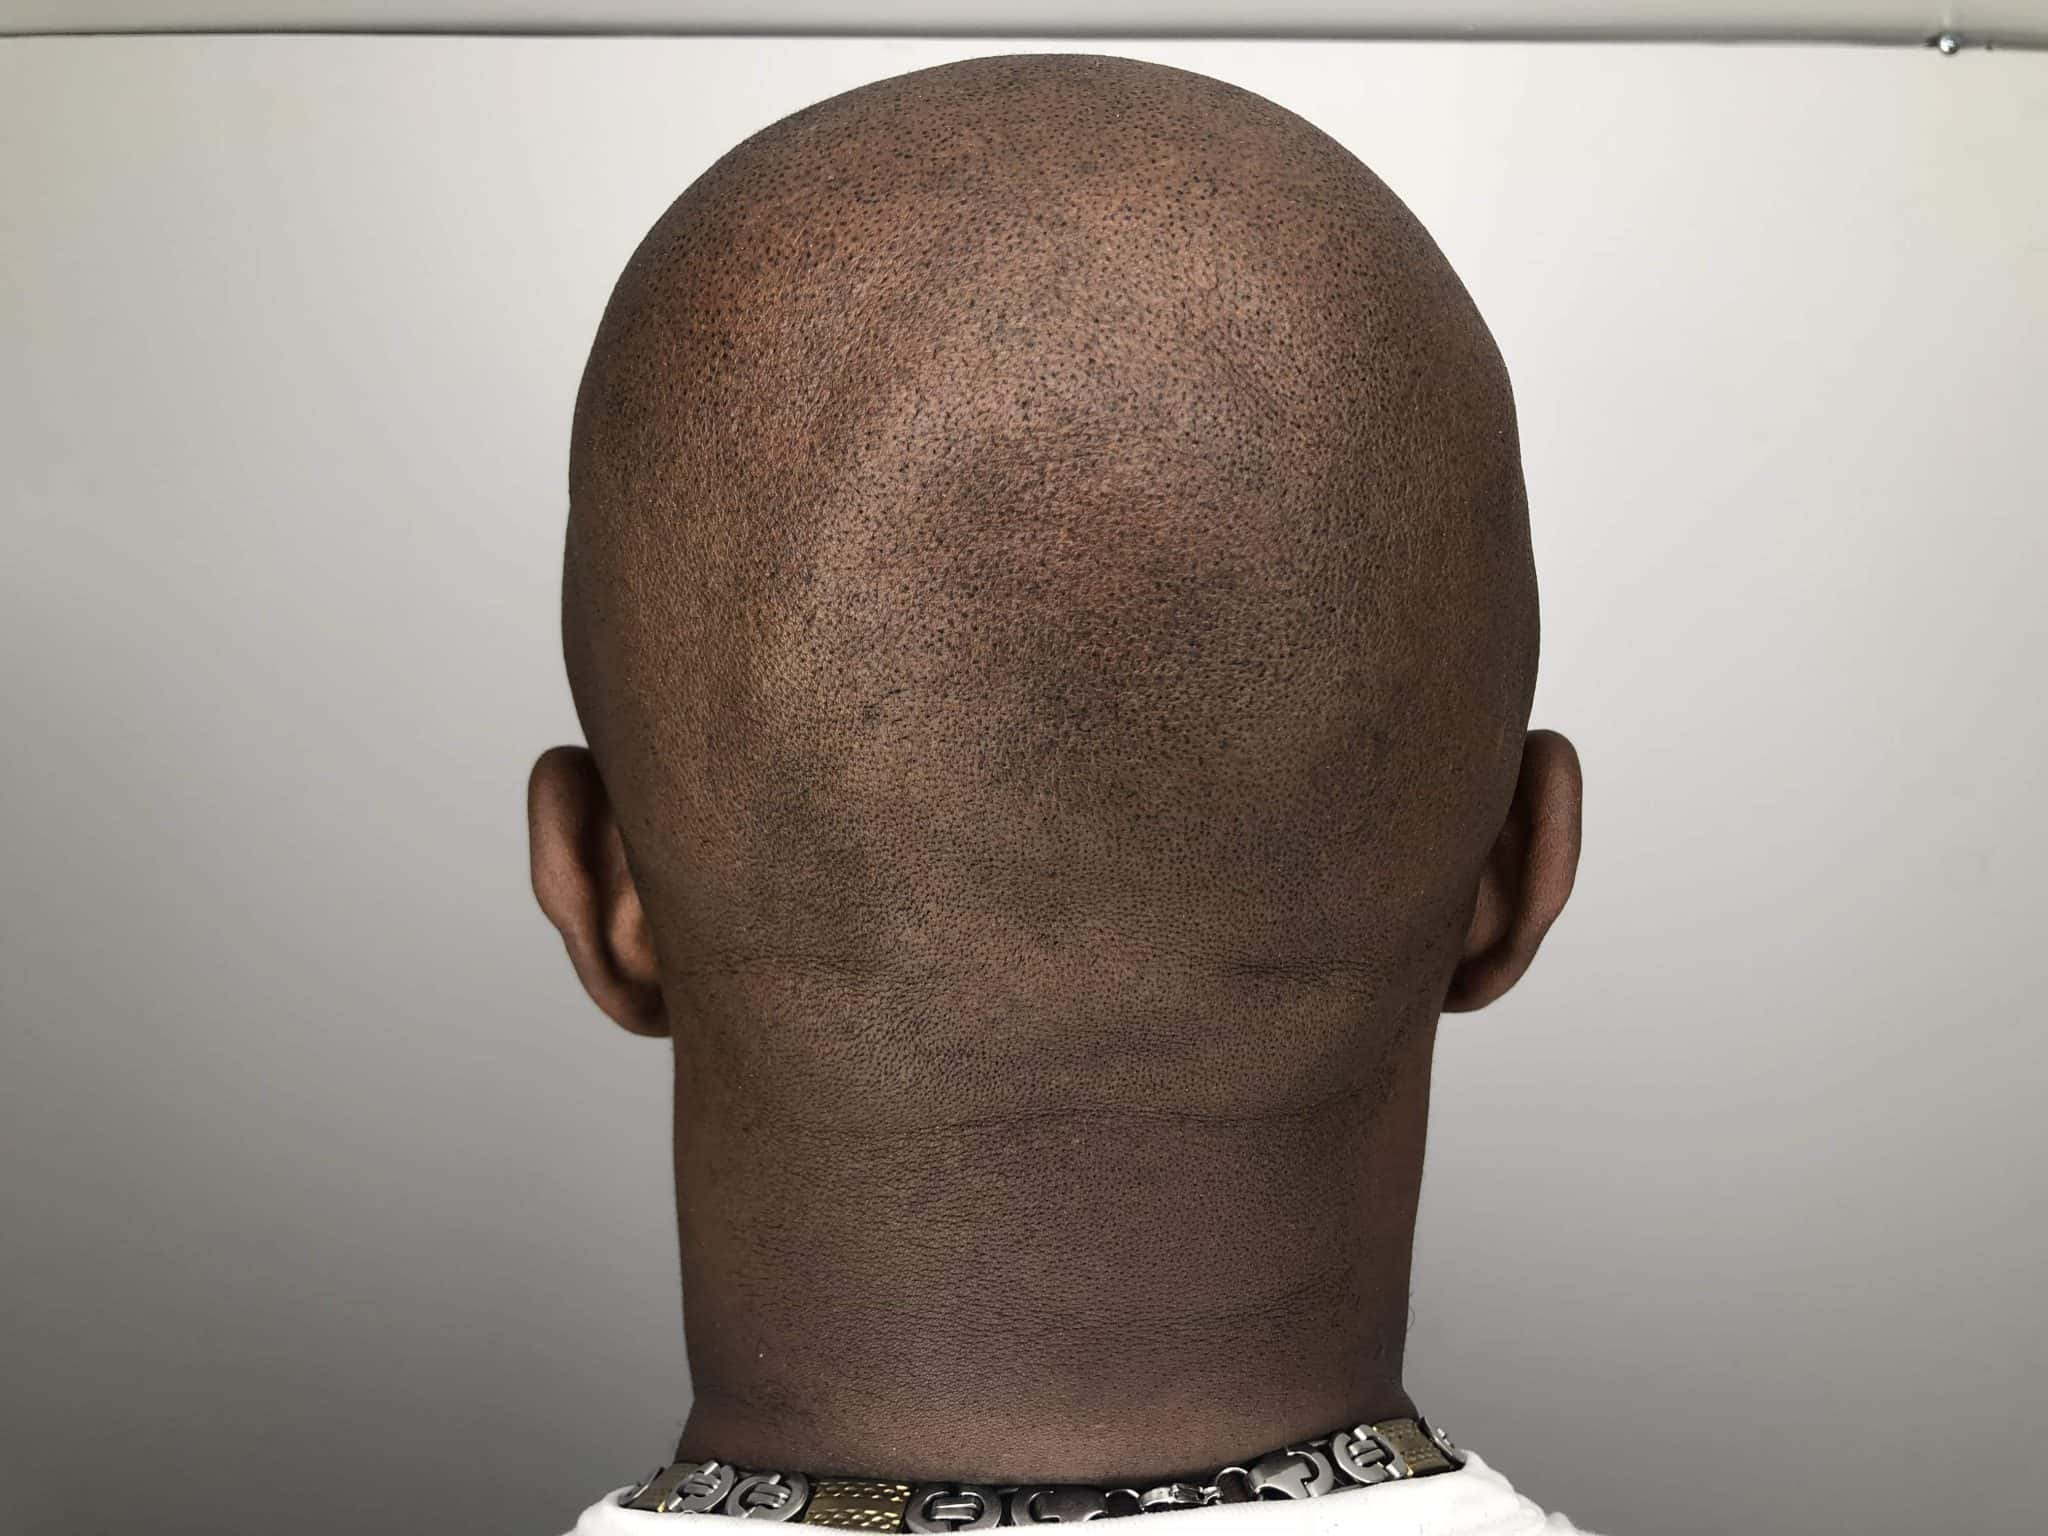 Scalp Micropigmentation Balding Fix Hairstyle Tattoo Image